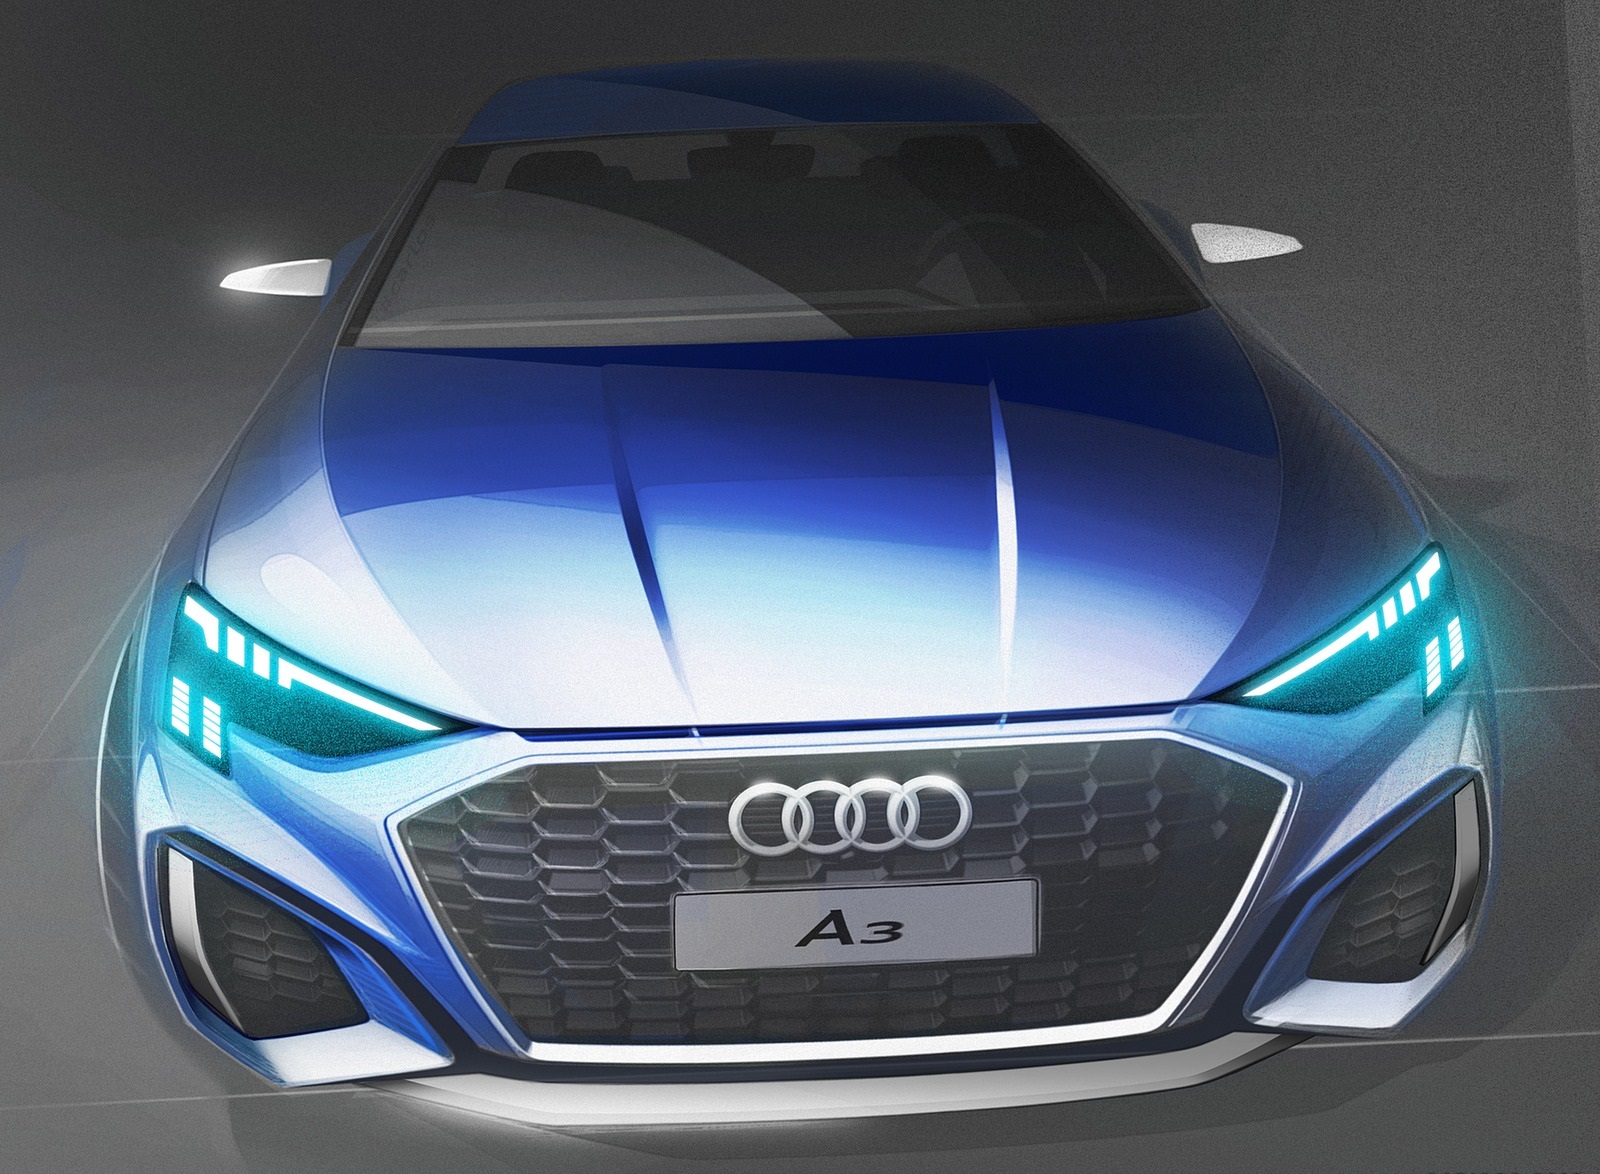 2021 Audi A3 Sportback Design Sketch Wallpapers #110 of 121